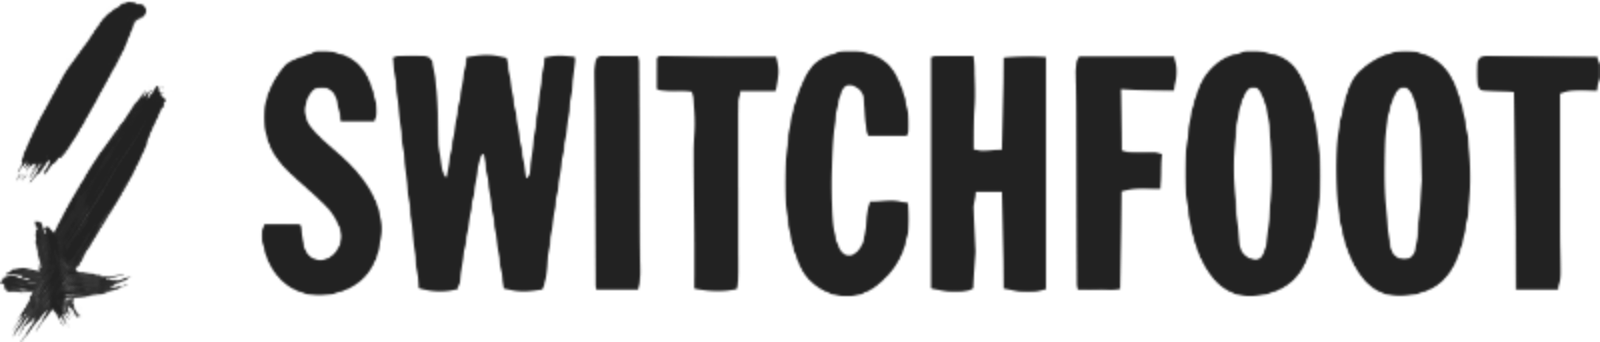 Switchfoot Logo